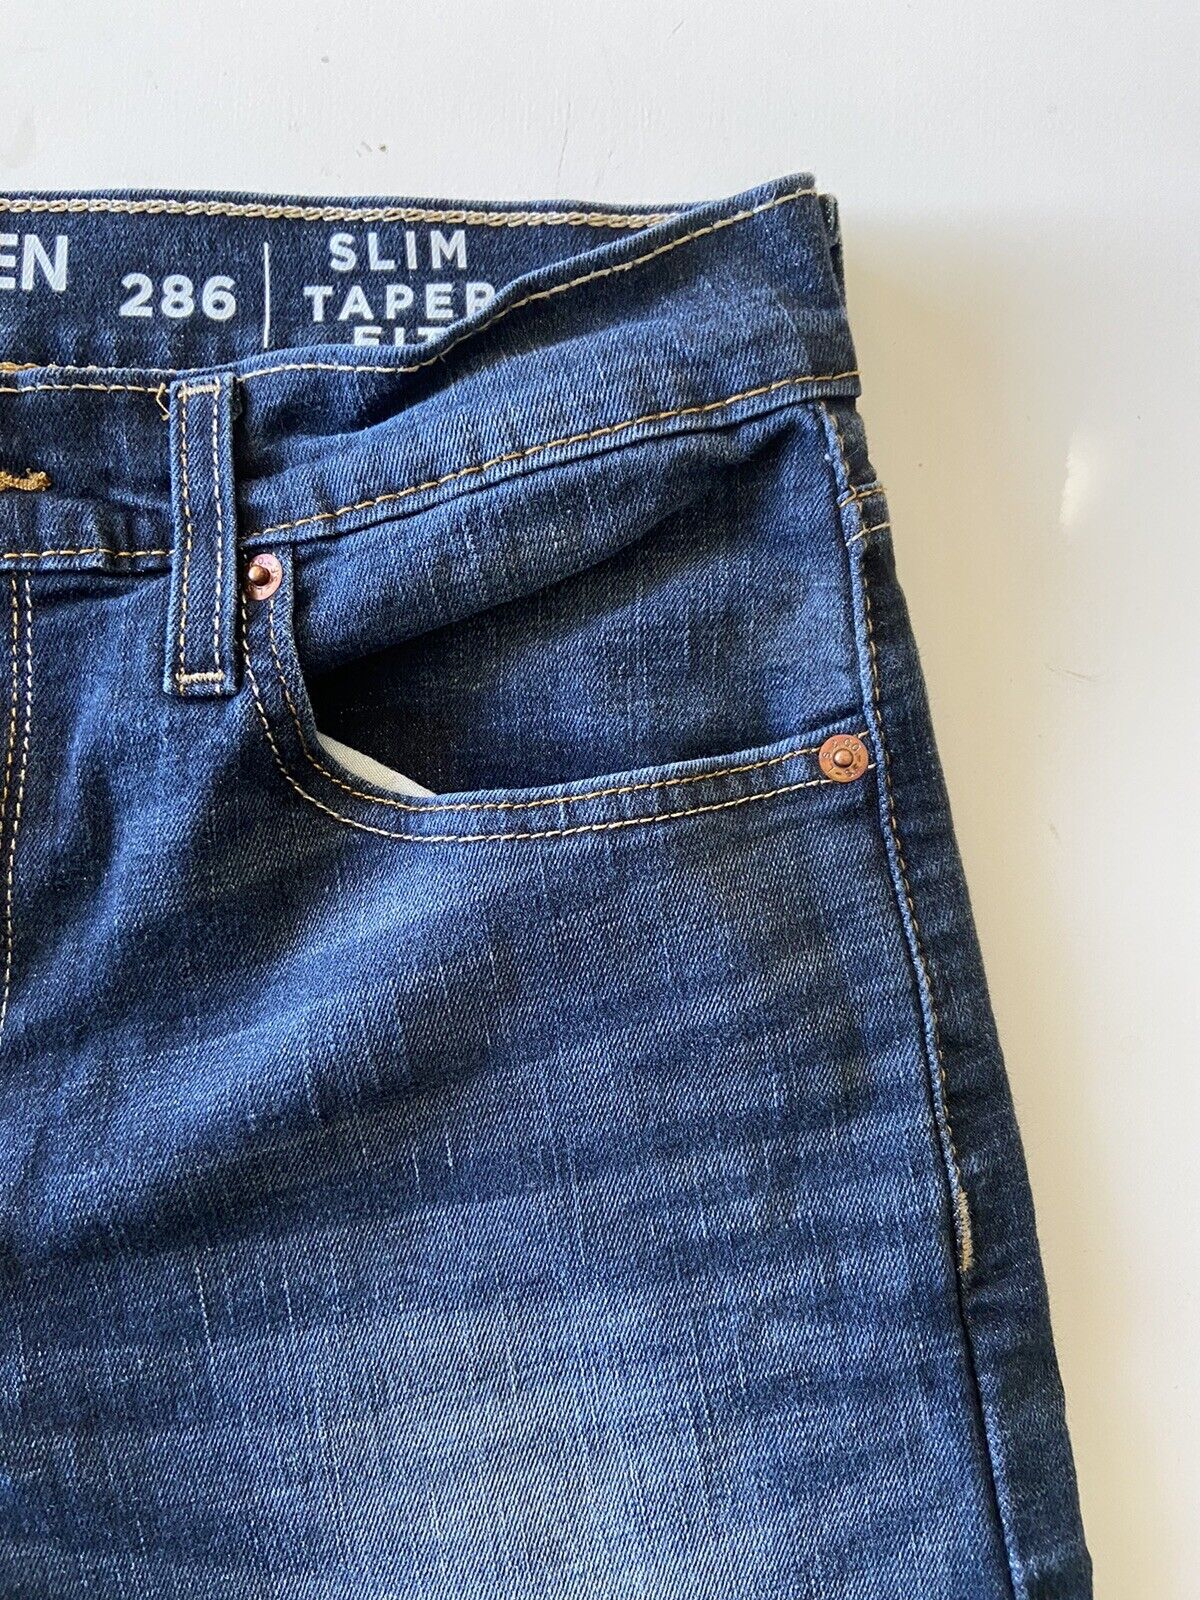 Denizen Levis 286 Jeans Slim Taper Fit Blue Stretch Mens Size